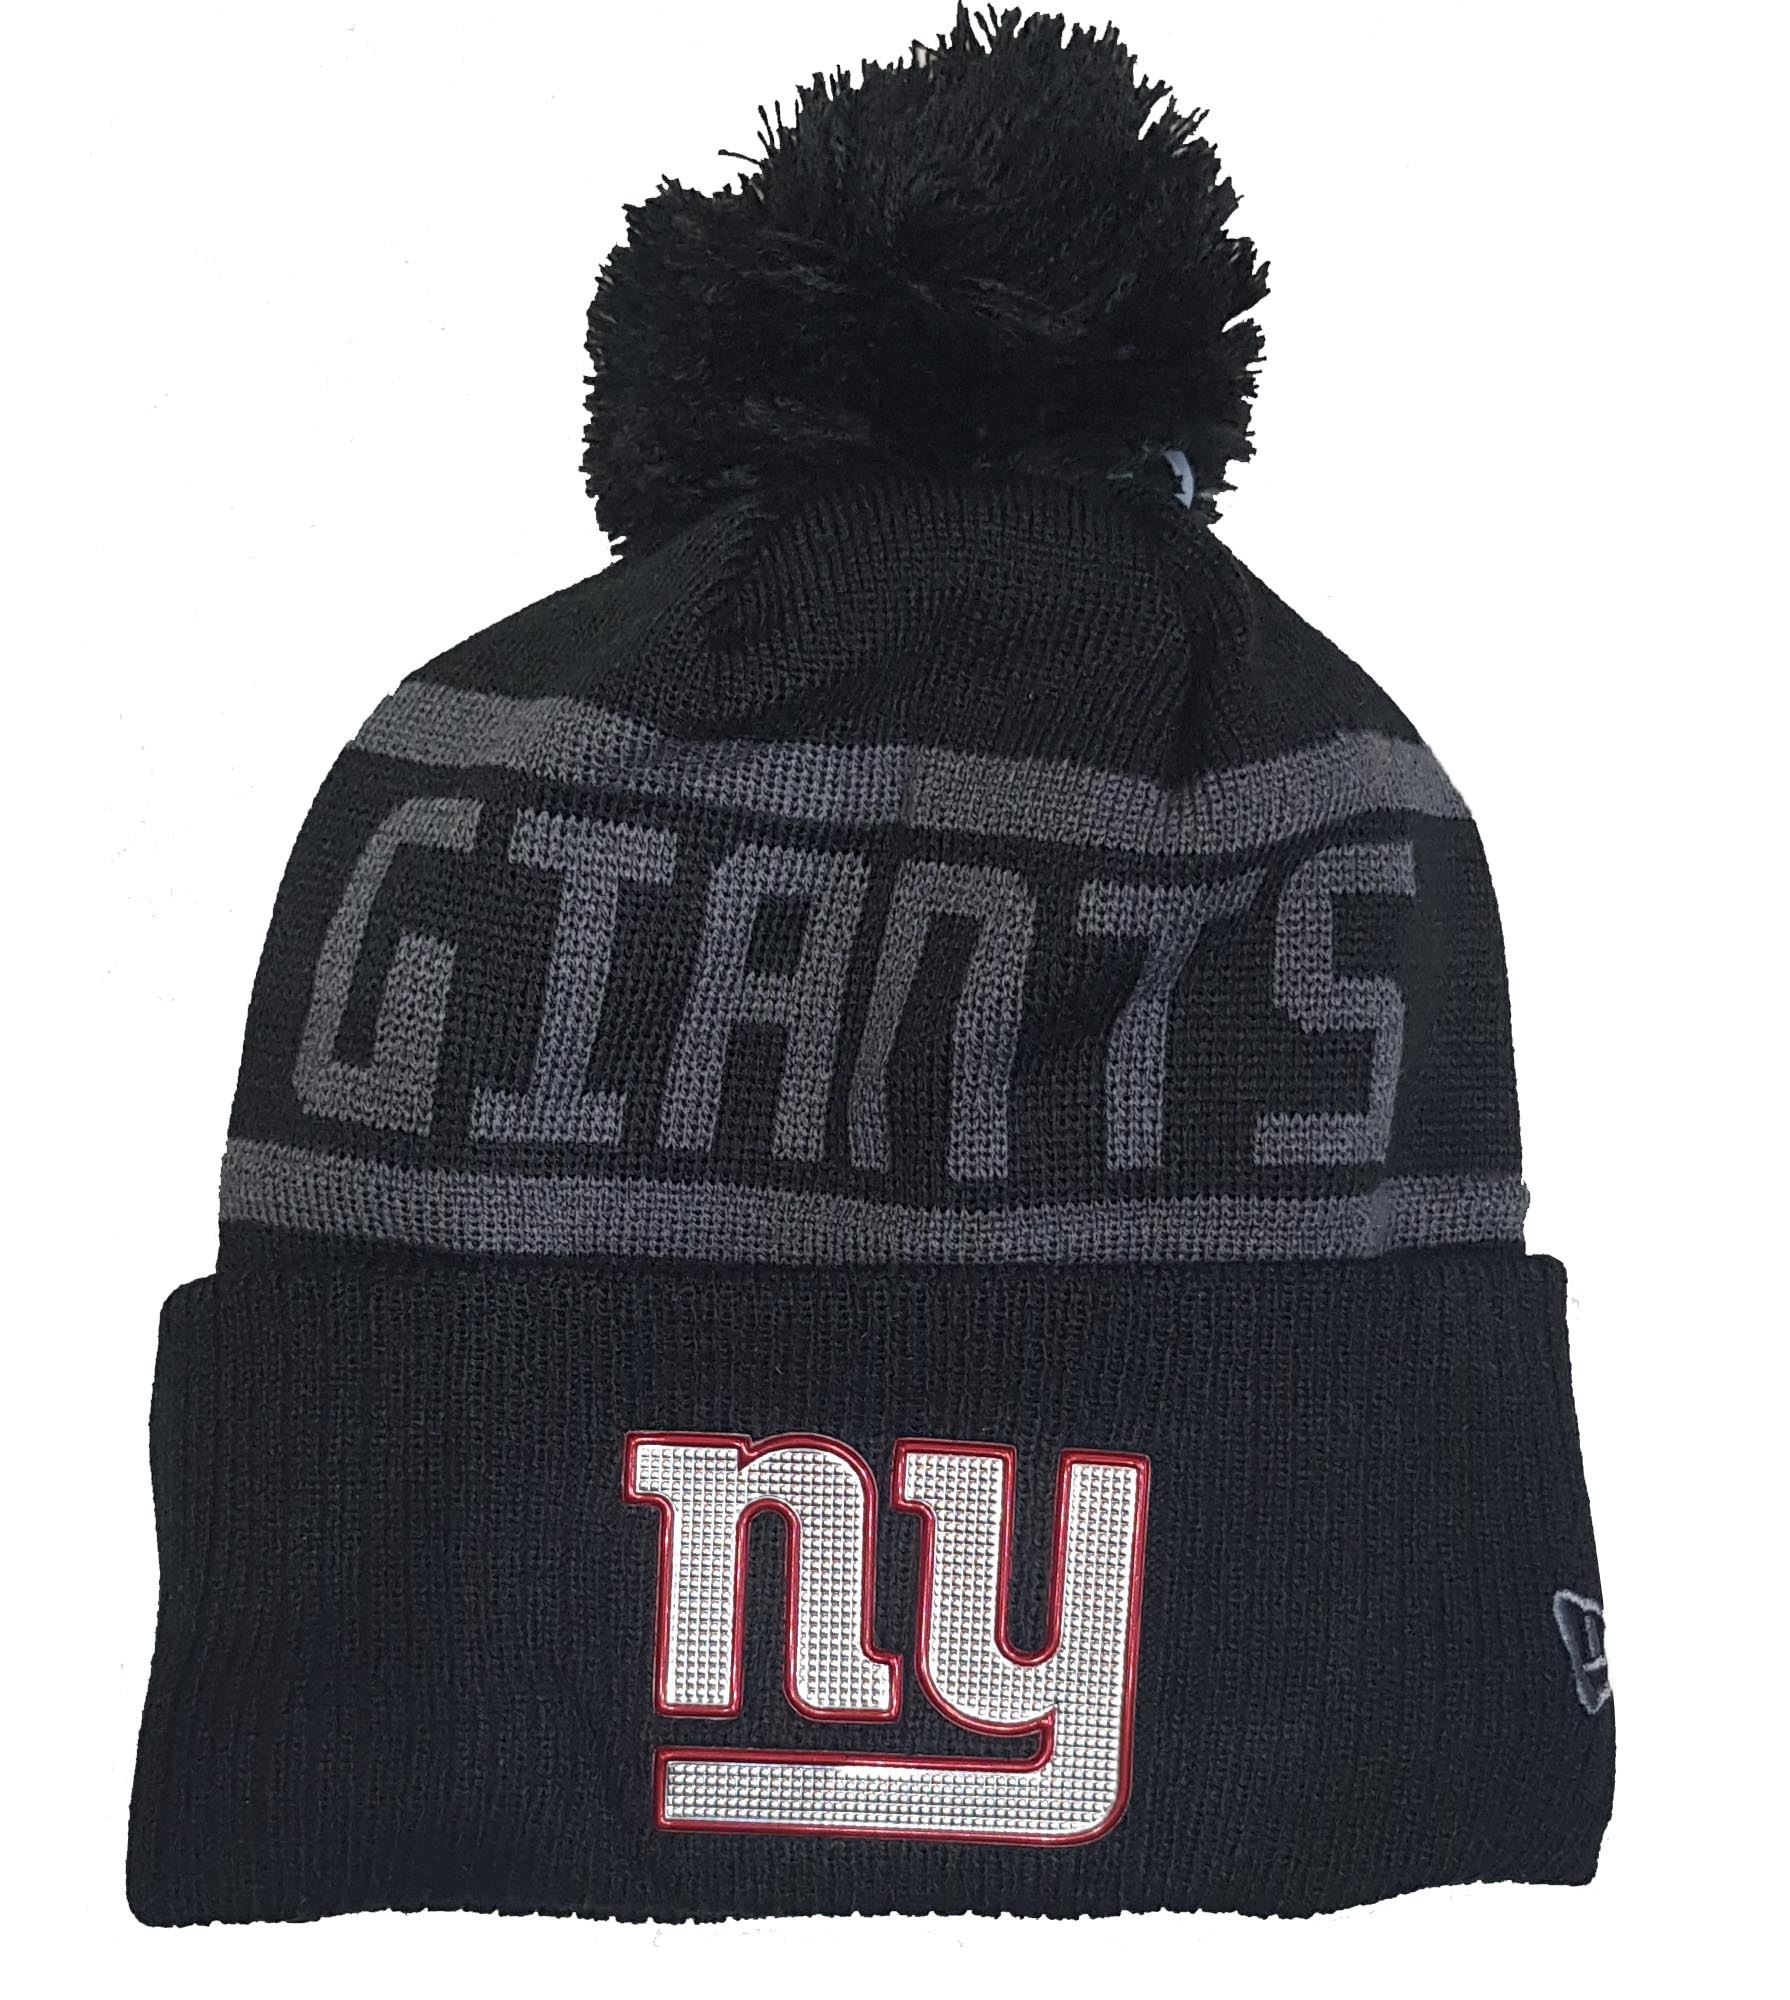 New York Giants NFL Black Collection Beanie New Era